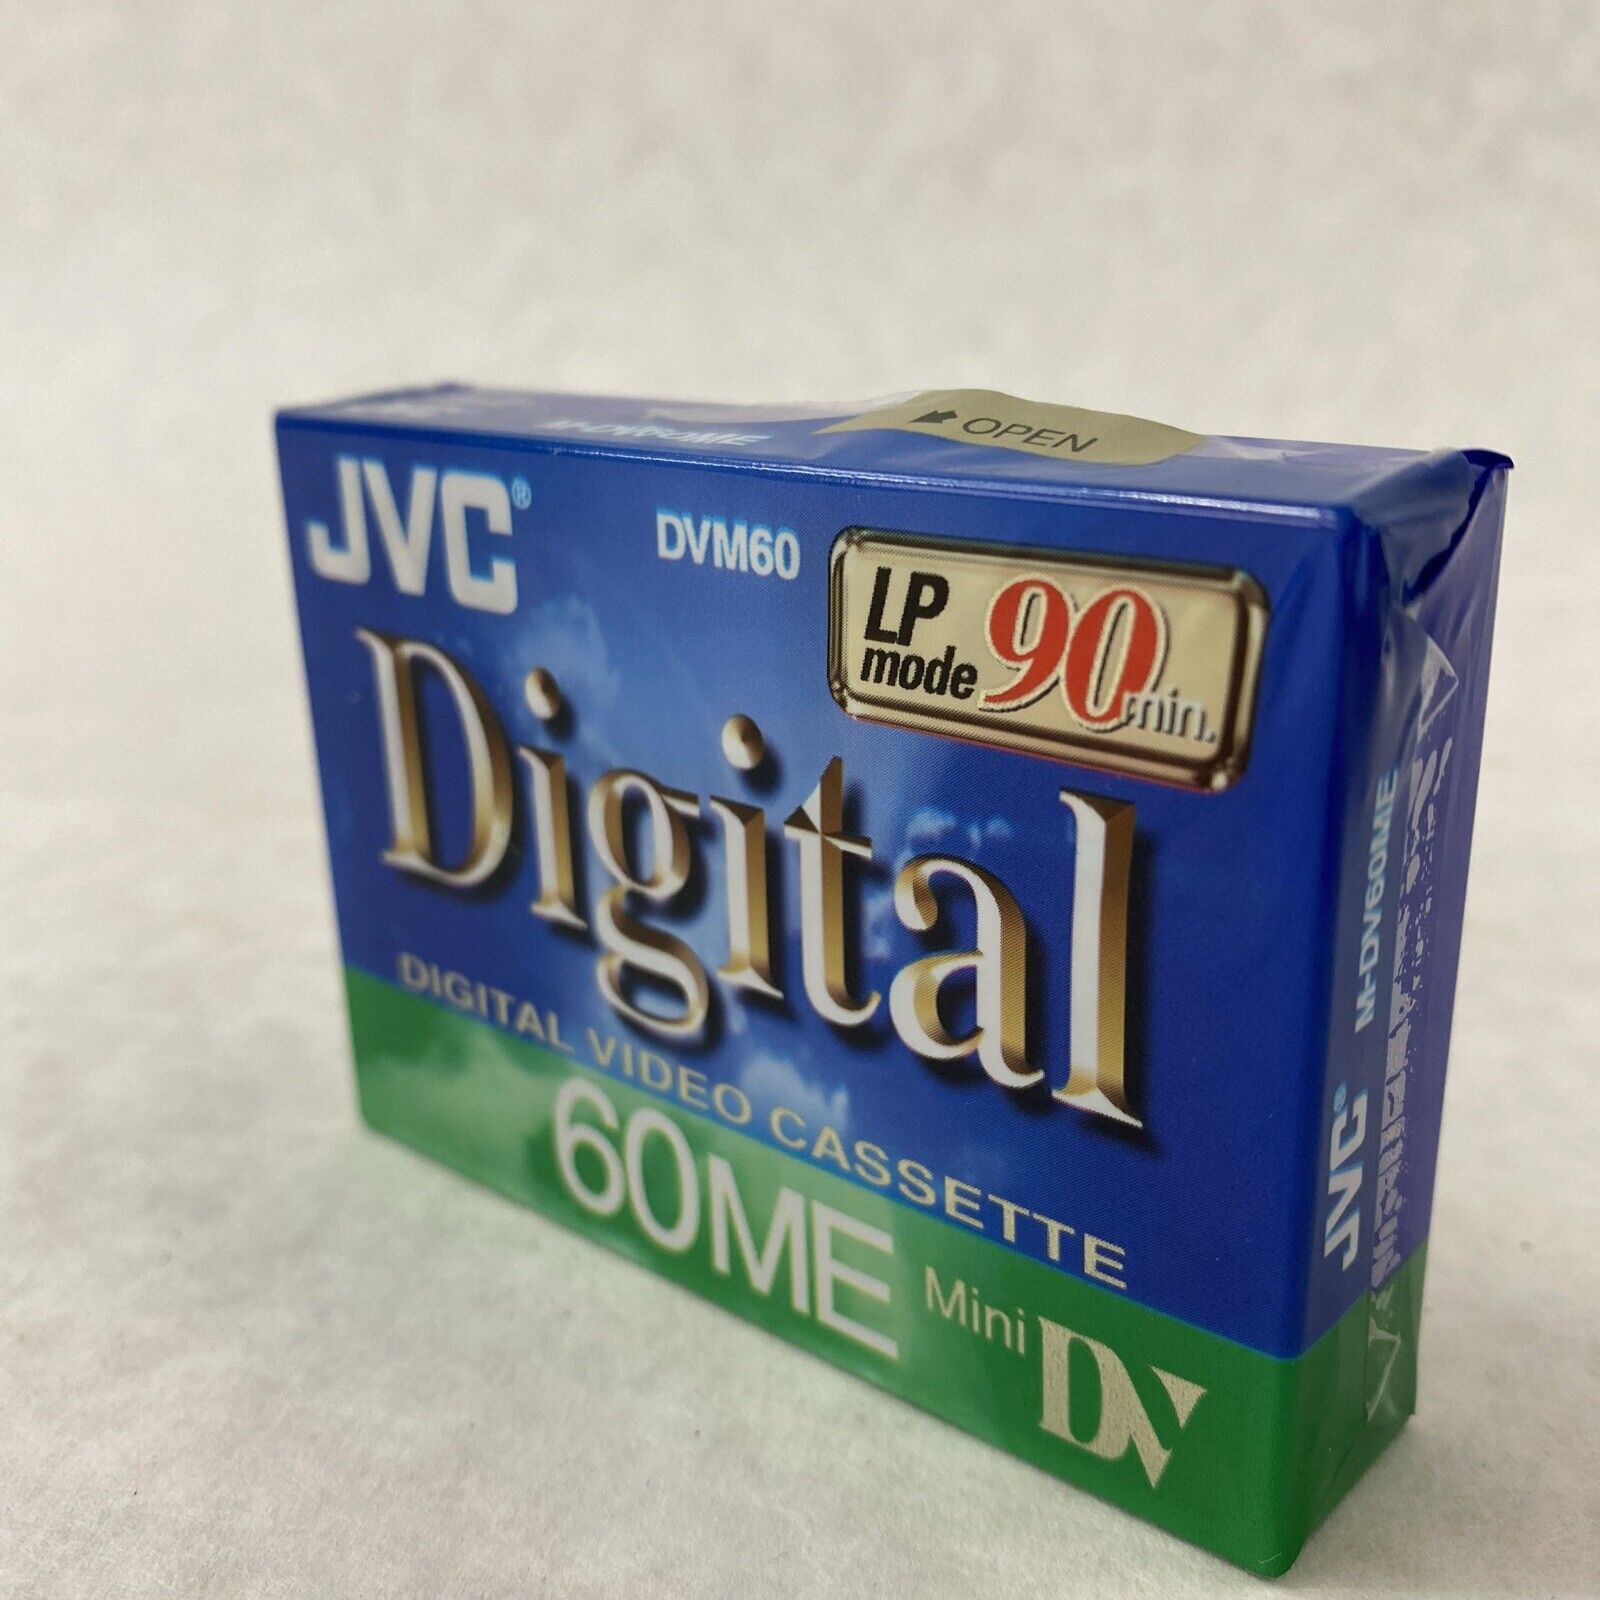 JVC DVM60 60ME Mini DV Digital Video Cassette LP Mode 90 Minutes SEALED